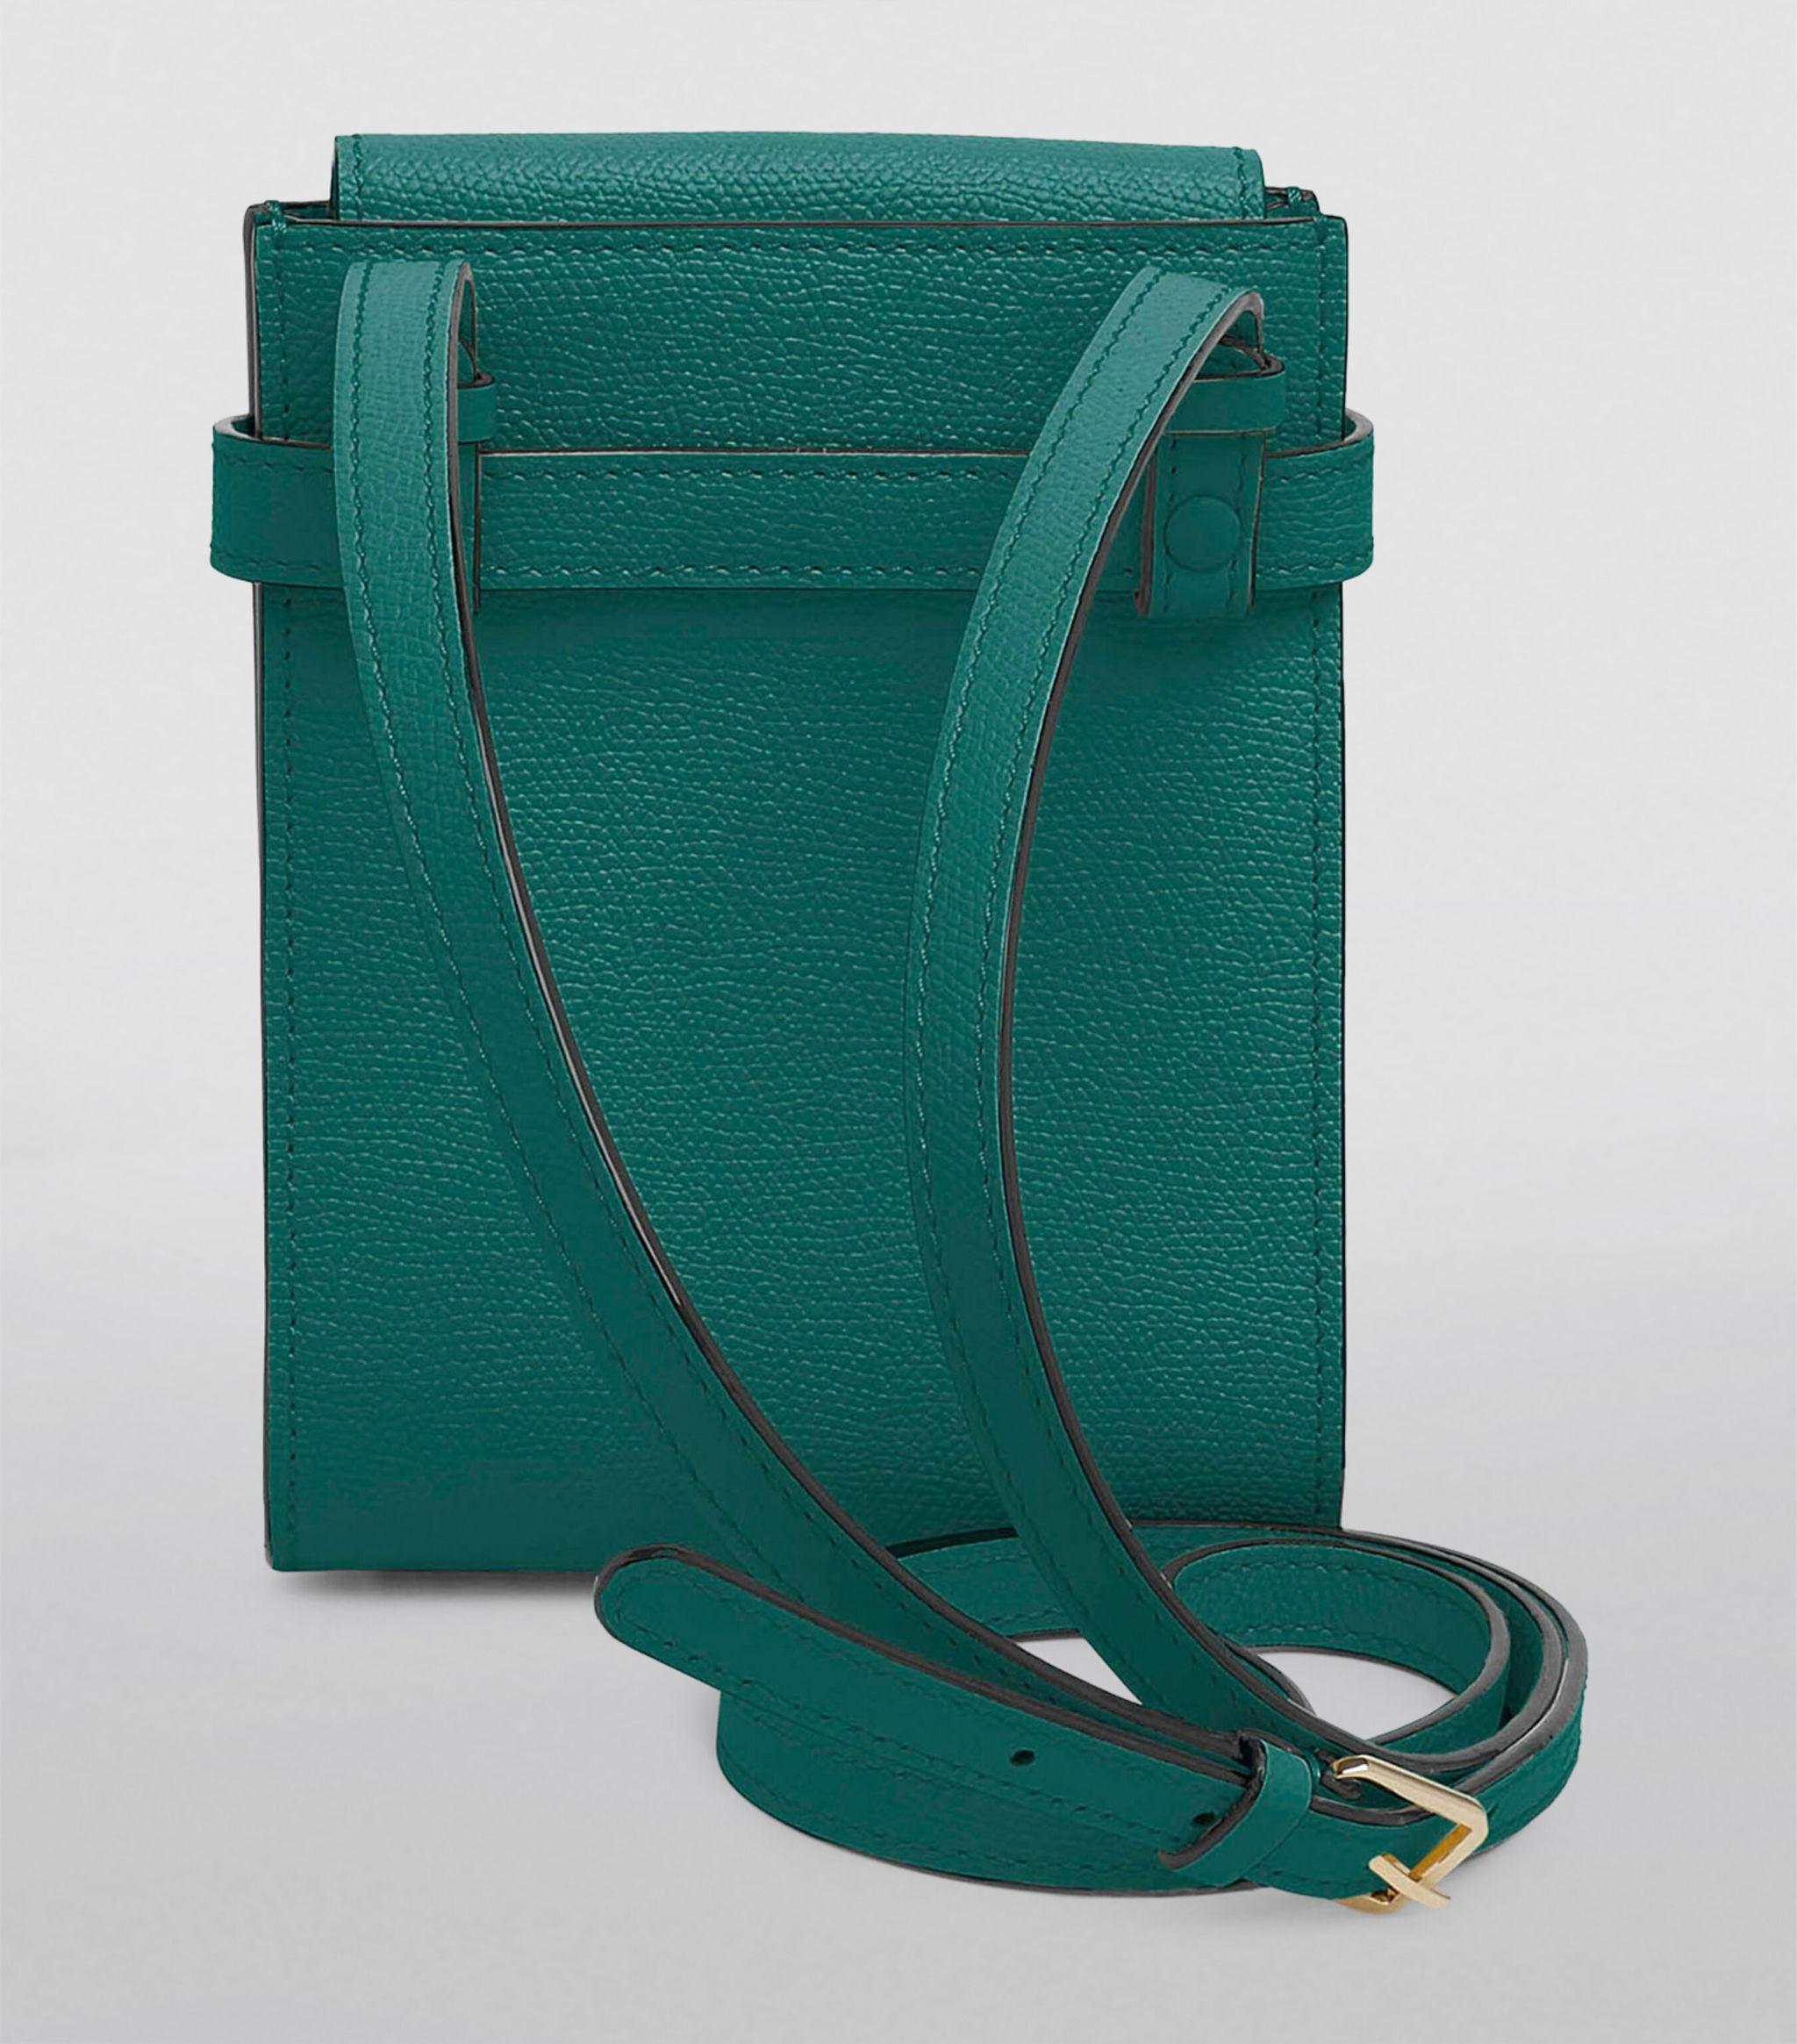 Brera micro leather handbag by Valextra